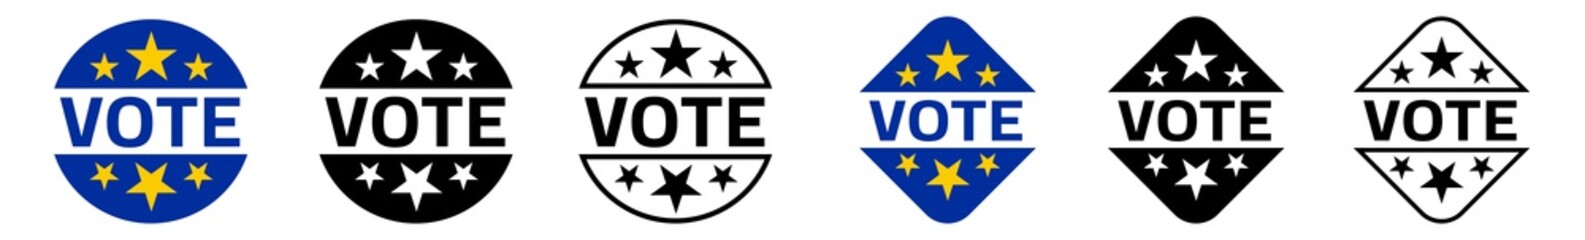 Vote Button EU Icon | European Union Voting Emblem Illustration | Europe Election Emblem Symbol | Choice Badge Logo | Euro Presidential Campaign Sign | Isolated | Variations